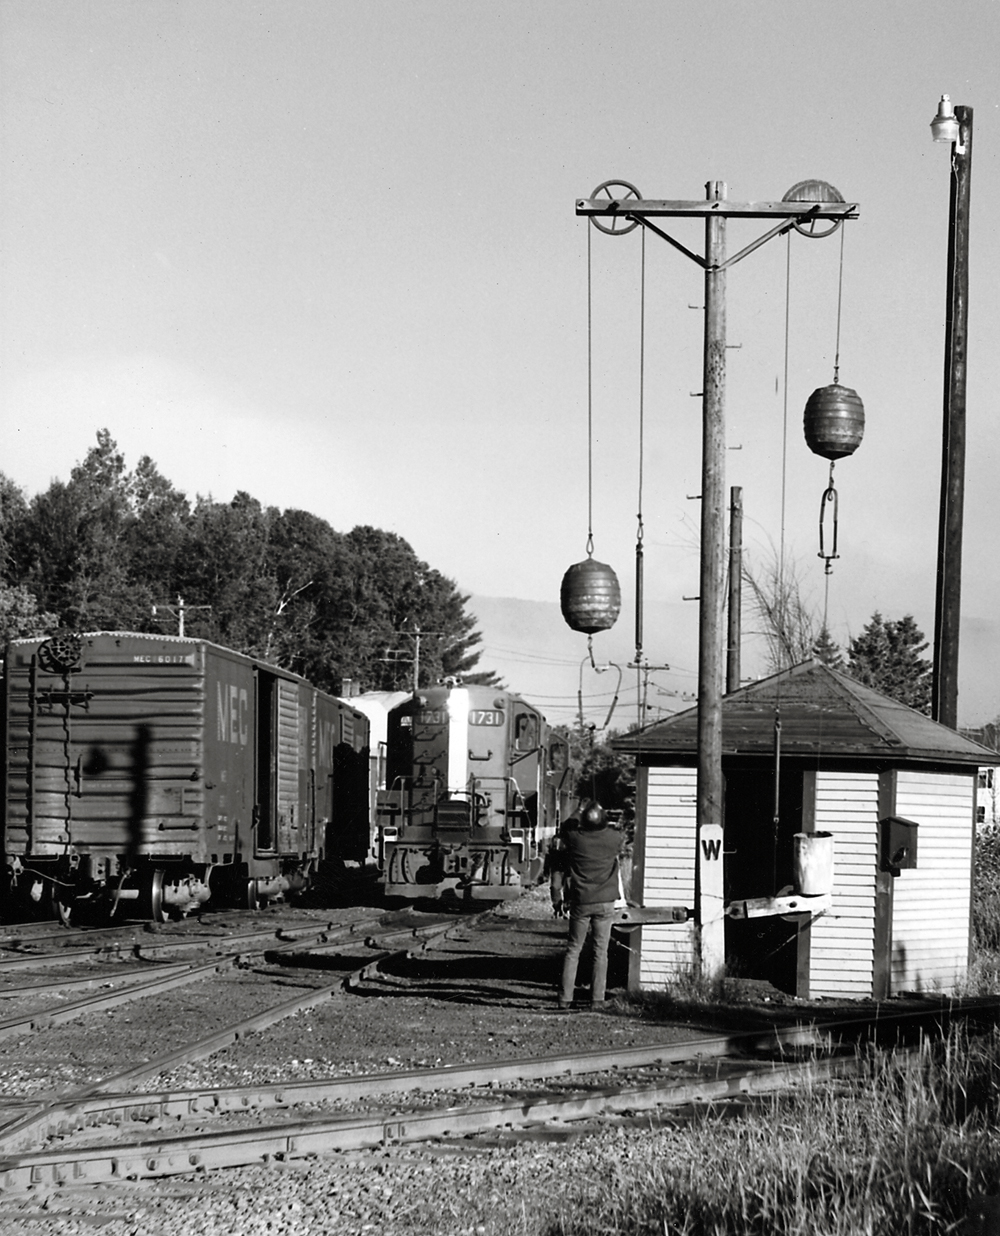 A man reaches to pull down a ball signal as a diesel locomotive approaches.